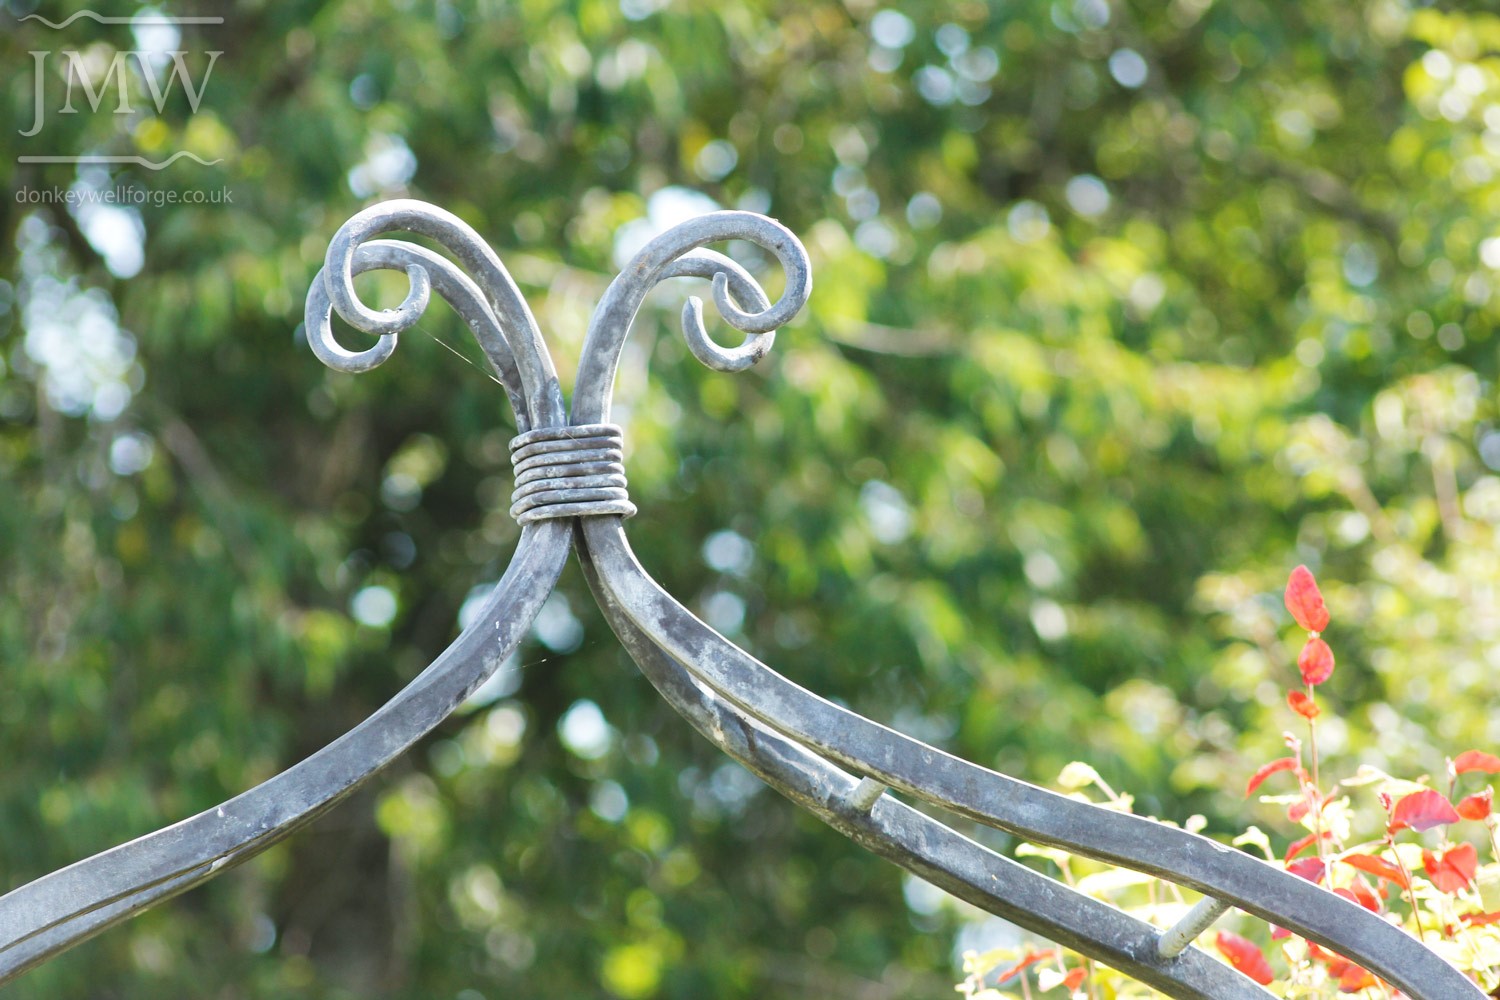 ornate-lead-finish-garden-arch-ironwork